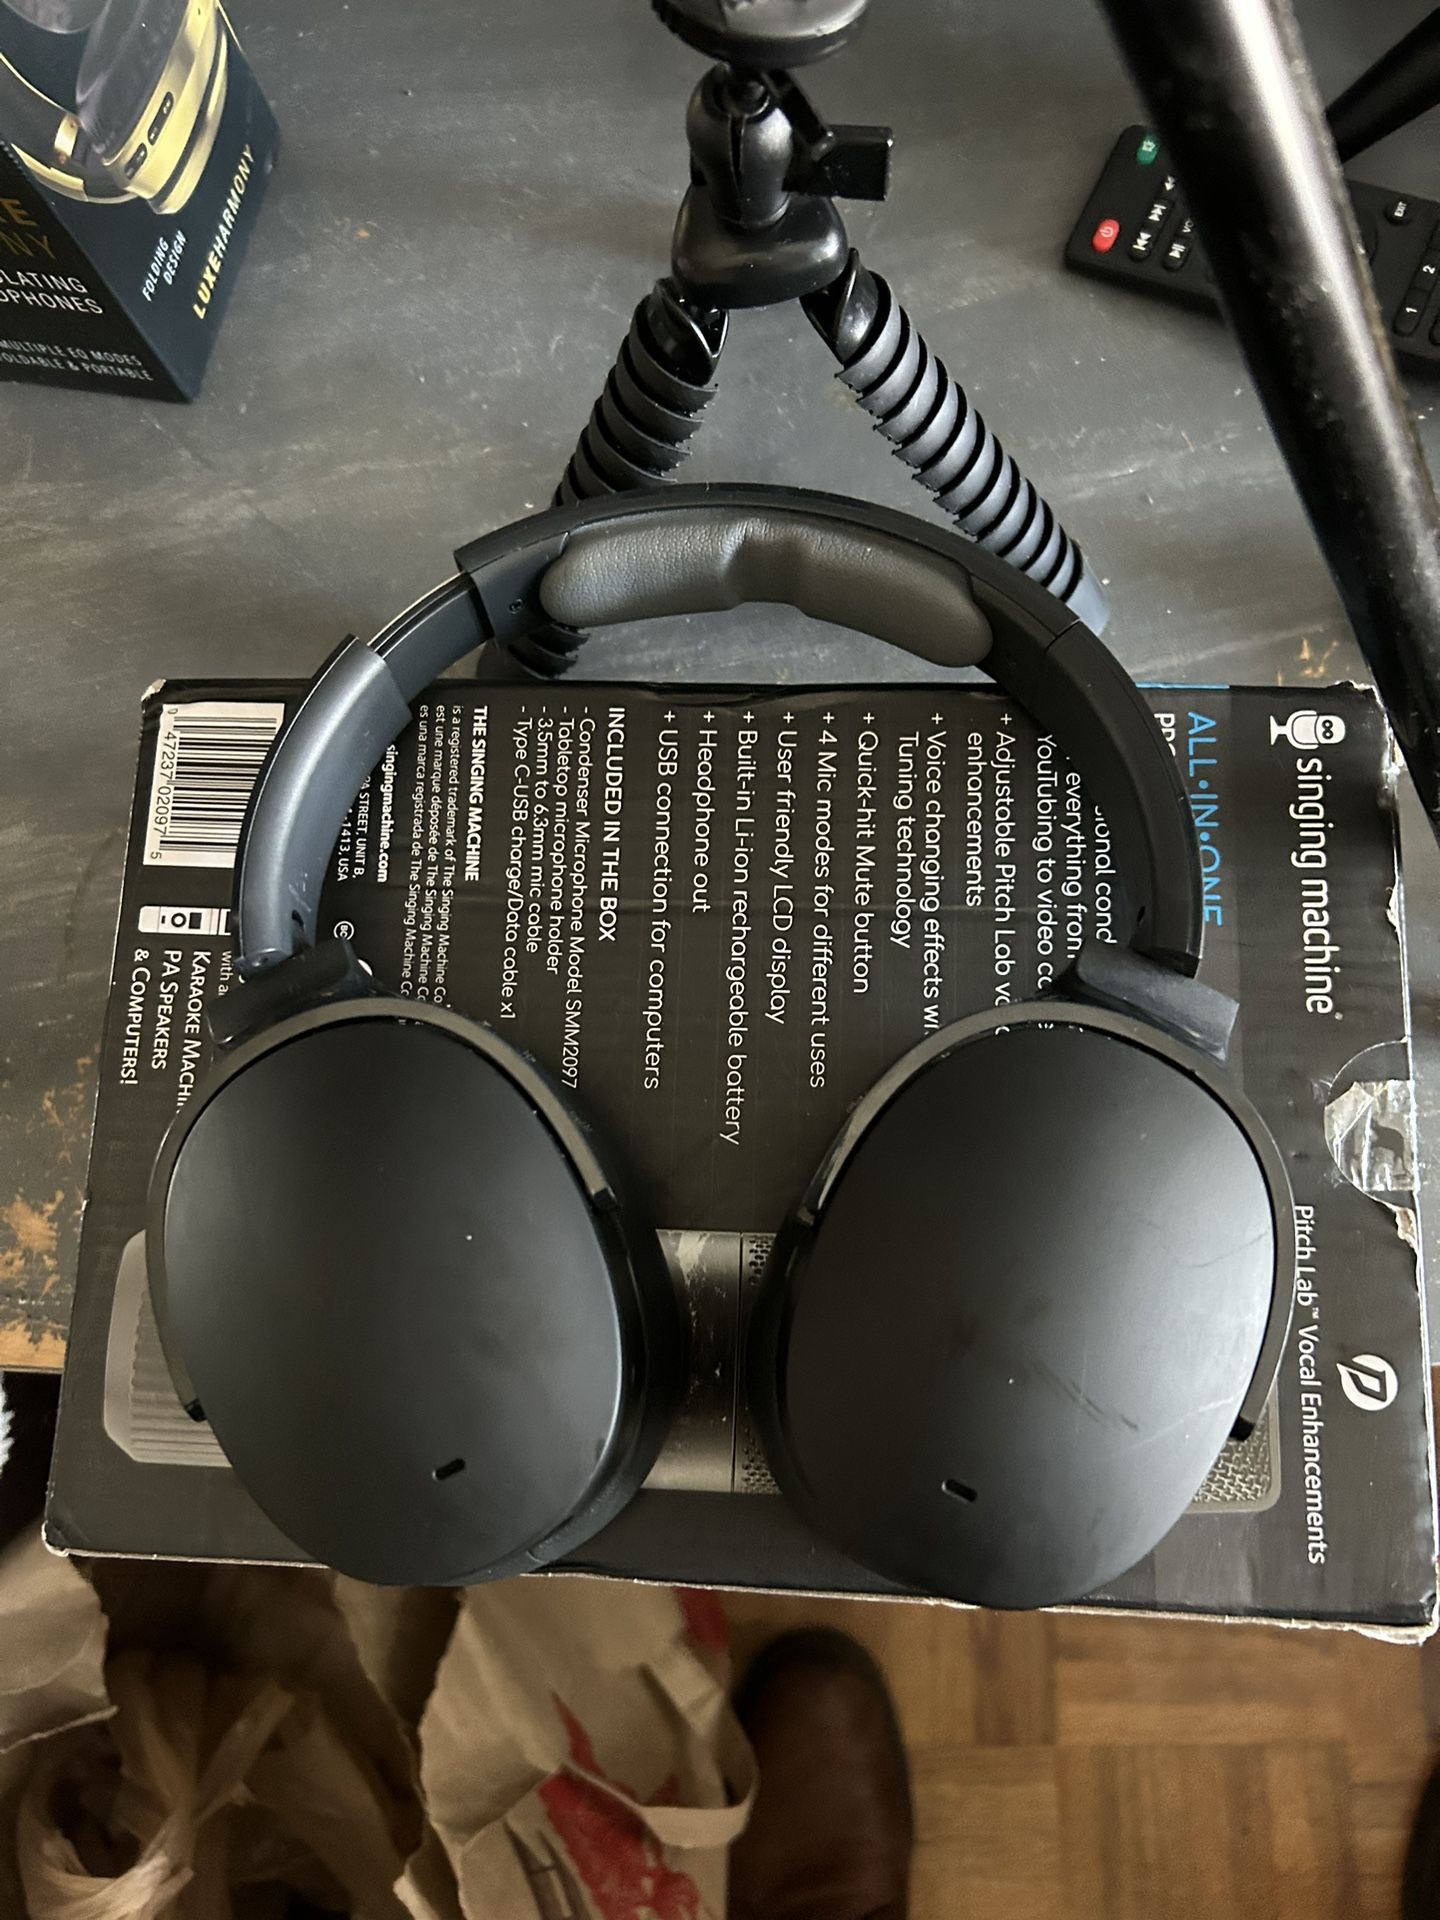 Skullcandy Hesh ANC Noise Canceling Bluetooth Wireless Over-Ear Headphones - Black